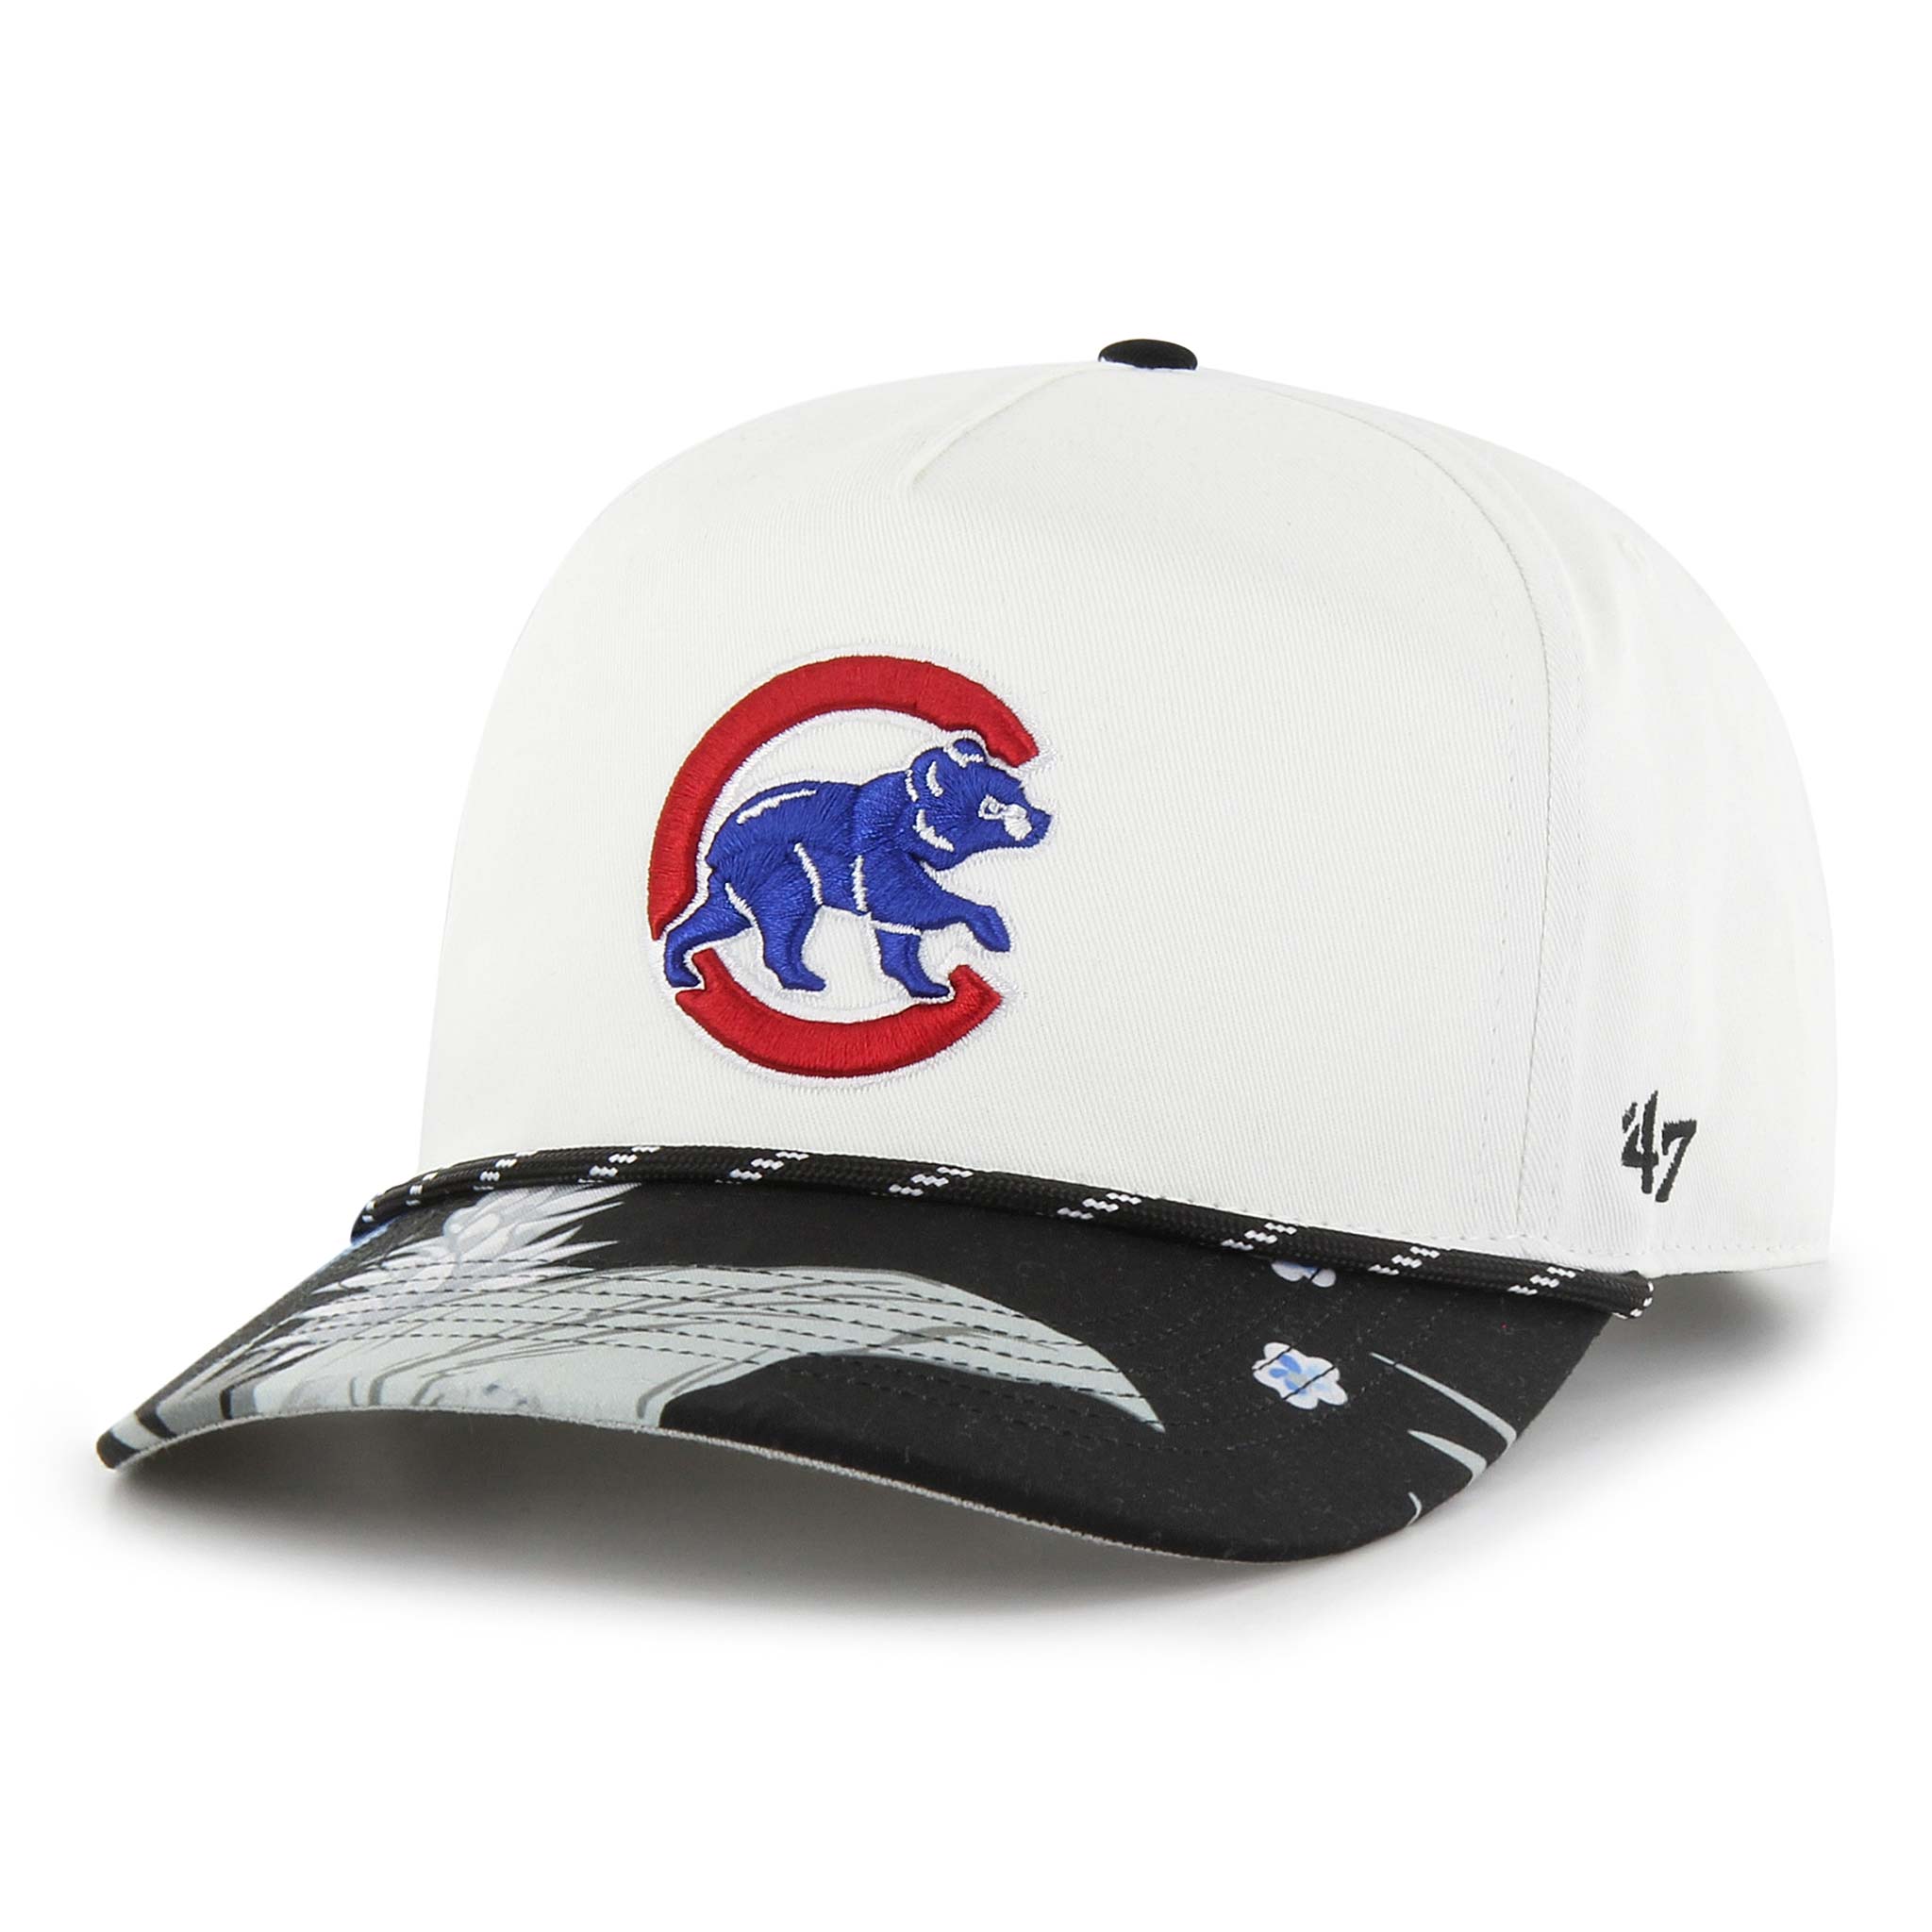 Men's '47 White Chicago Cubs Dark Tropic Hitch Snapback Hat